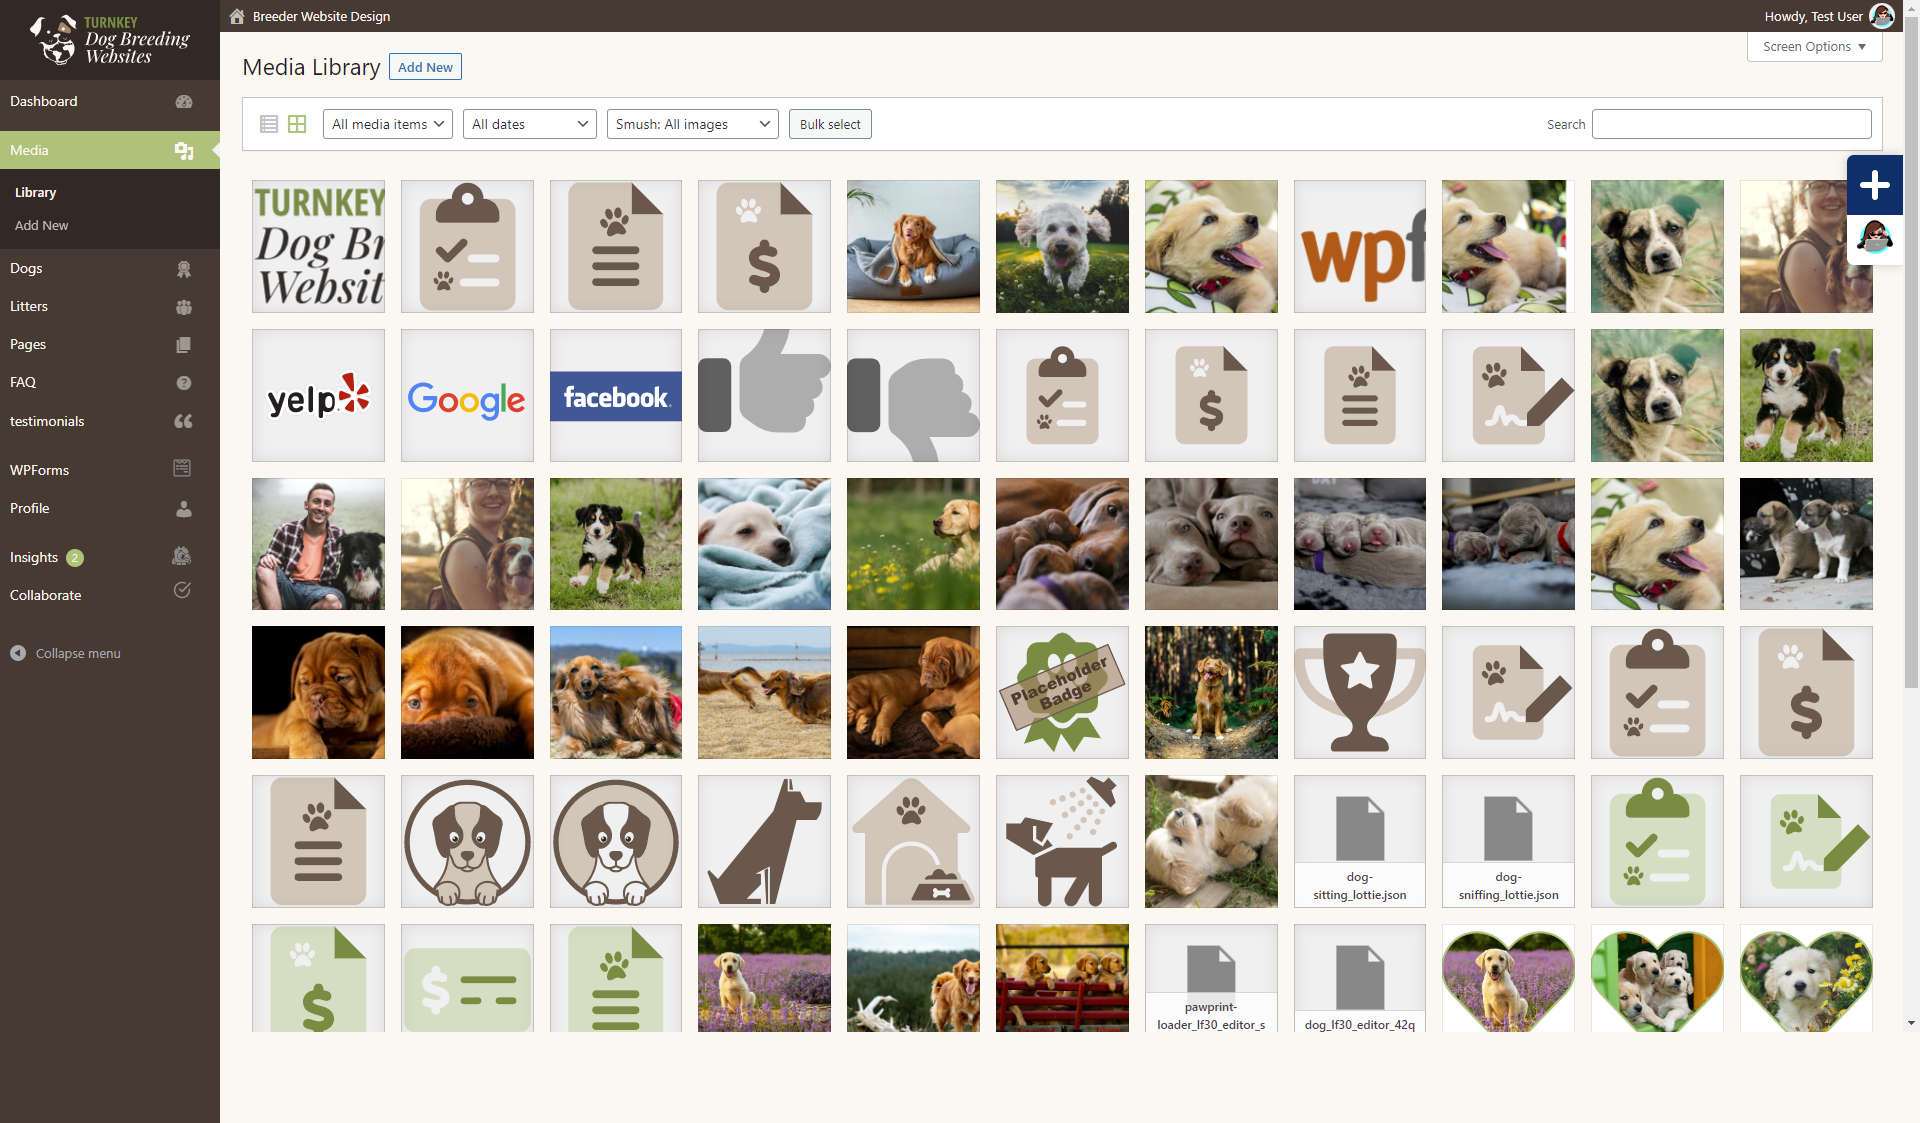 Turnkey Dog Breeding Websites Media dashboard screenshot